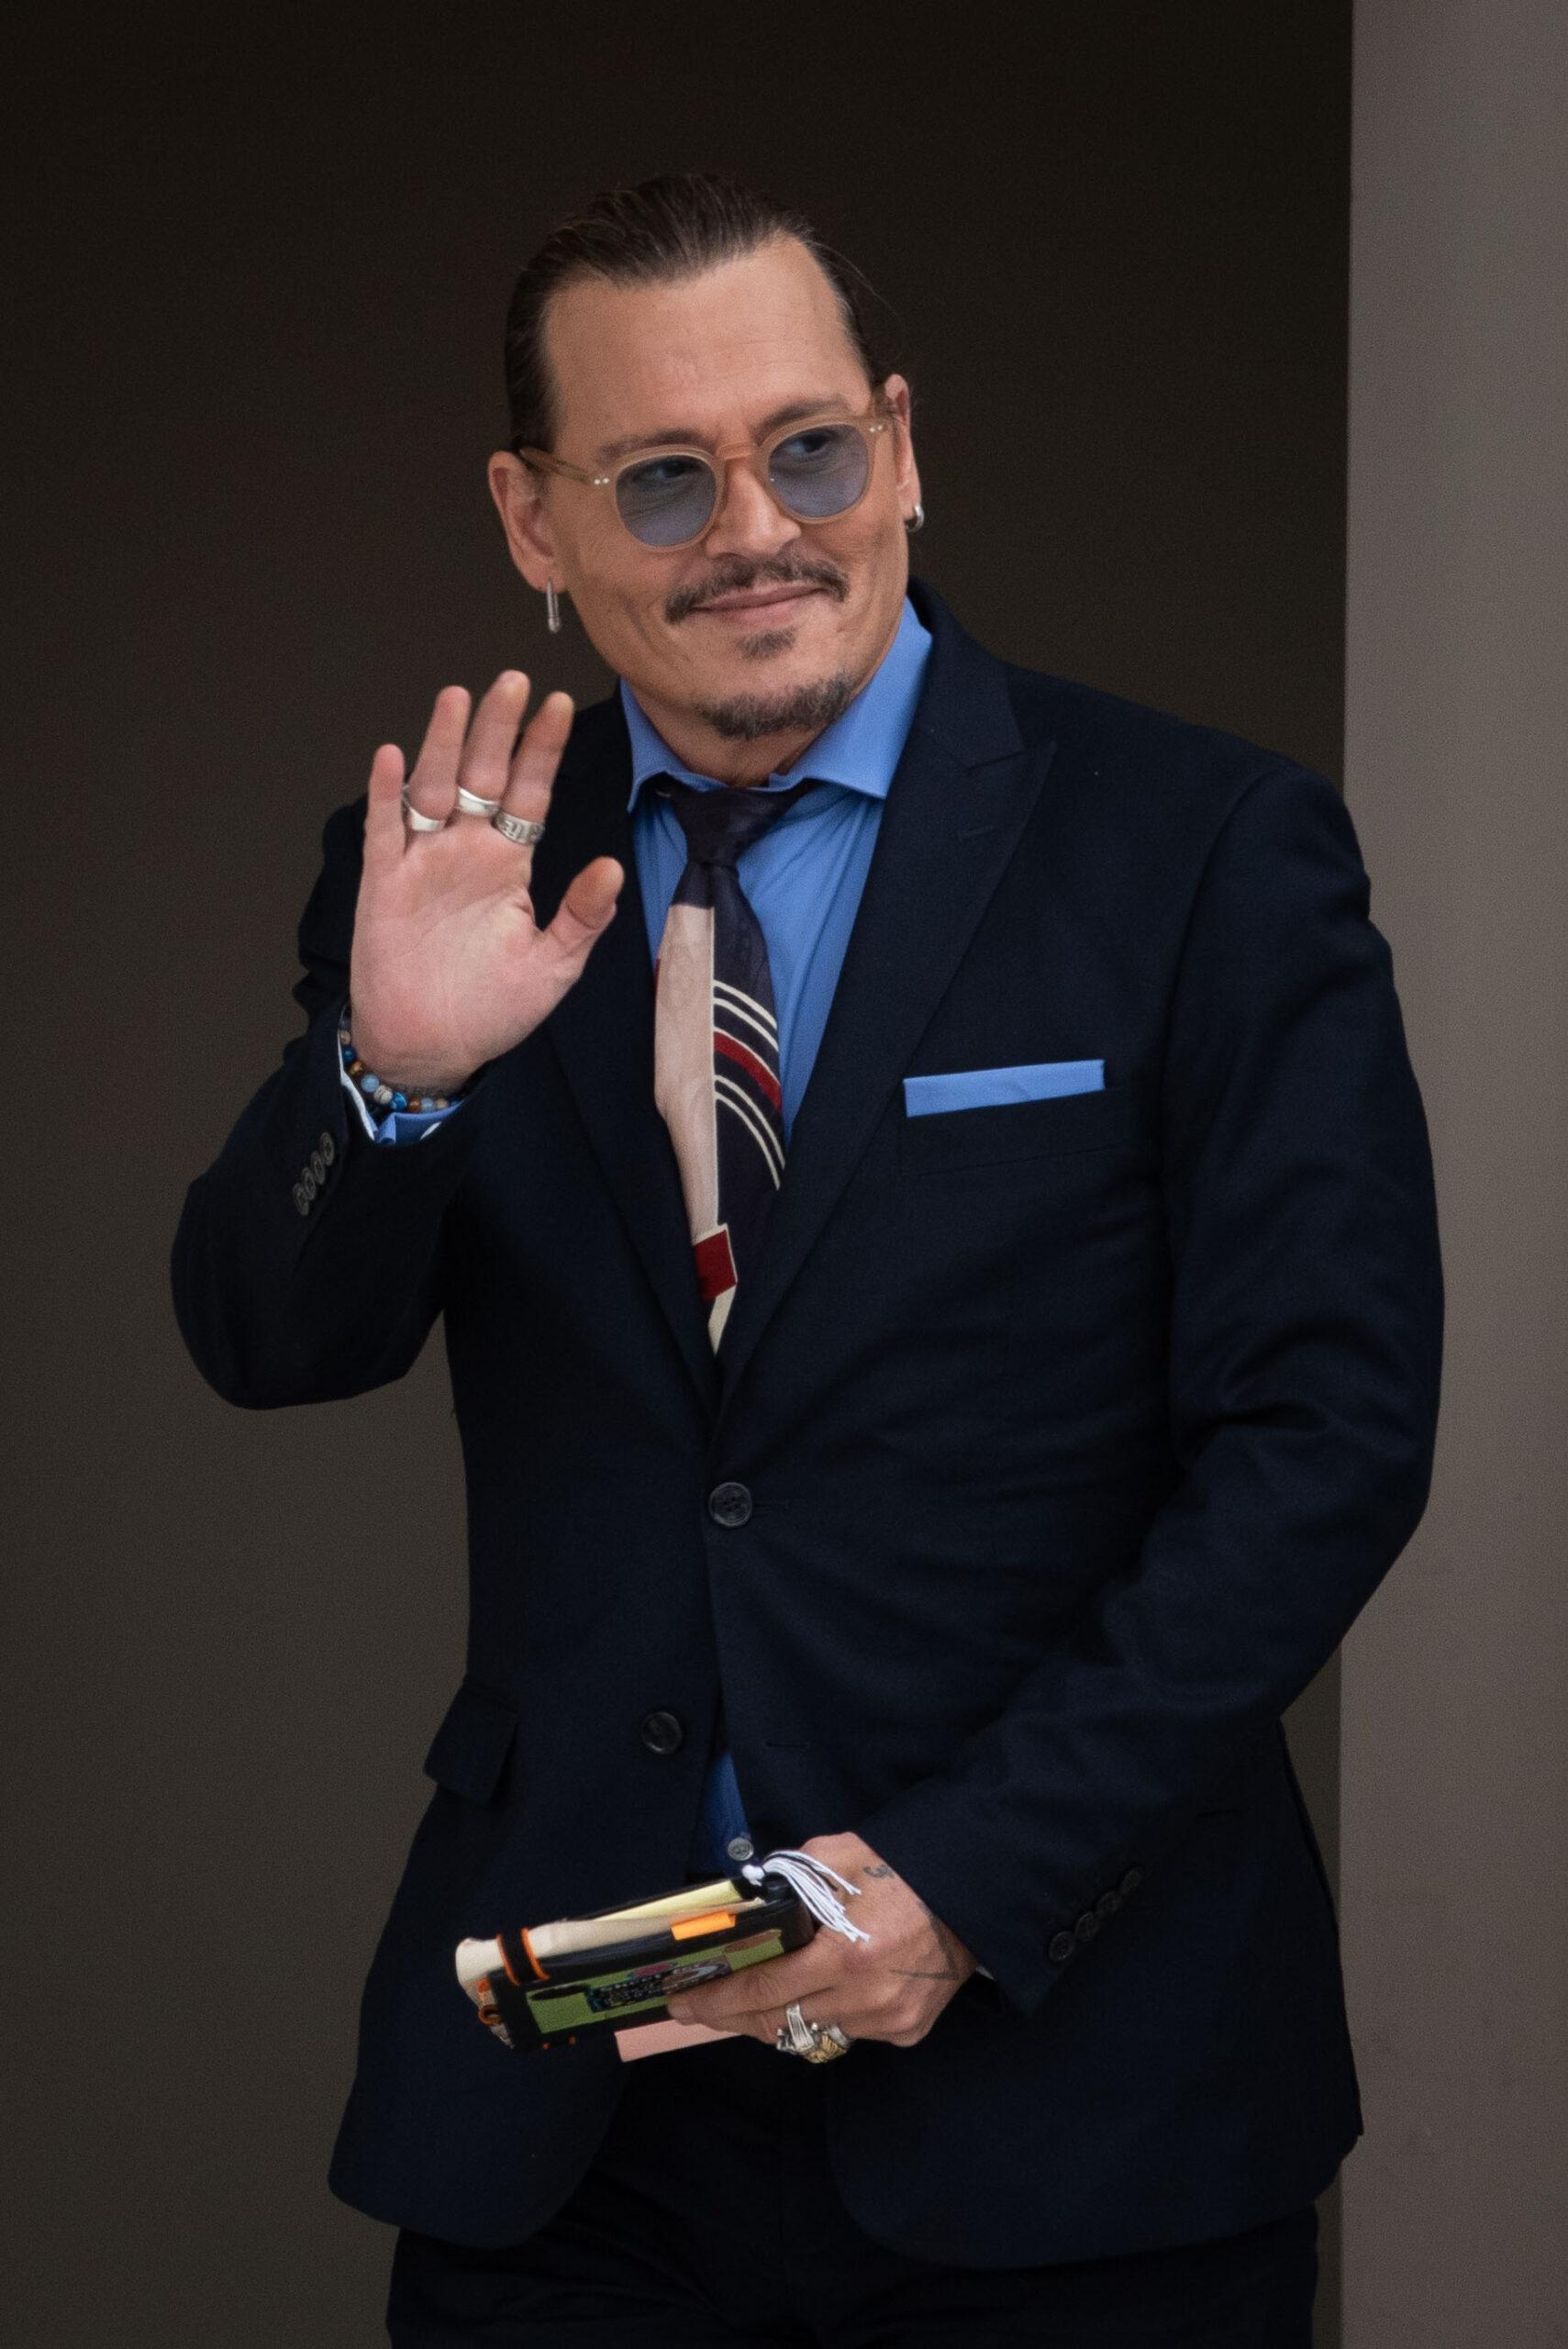 Johnny Depp - Amber Heard Trial